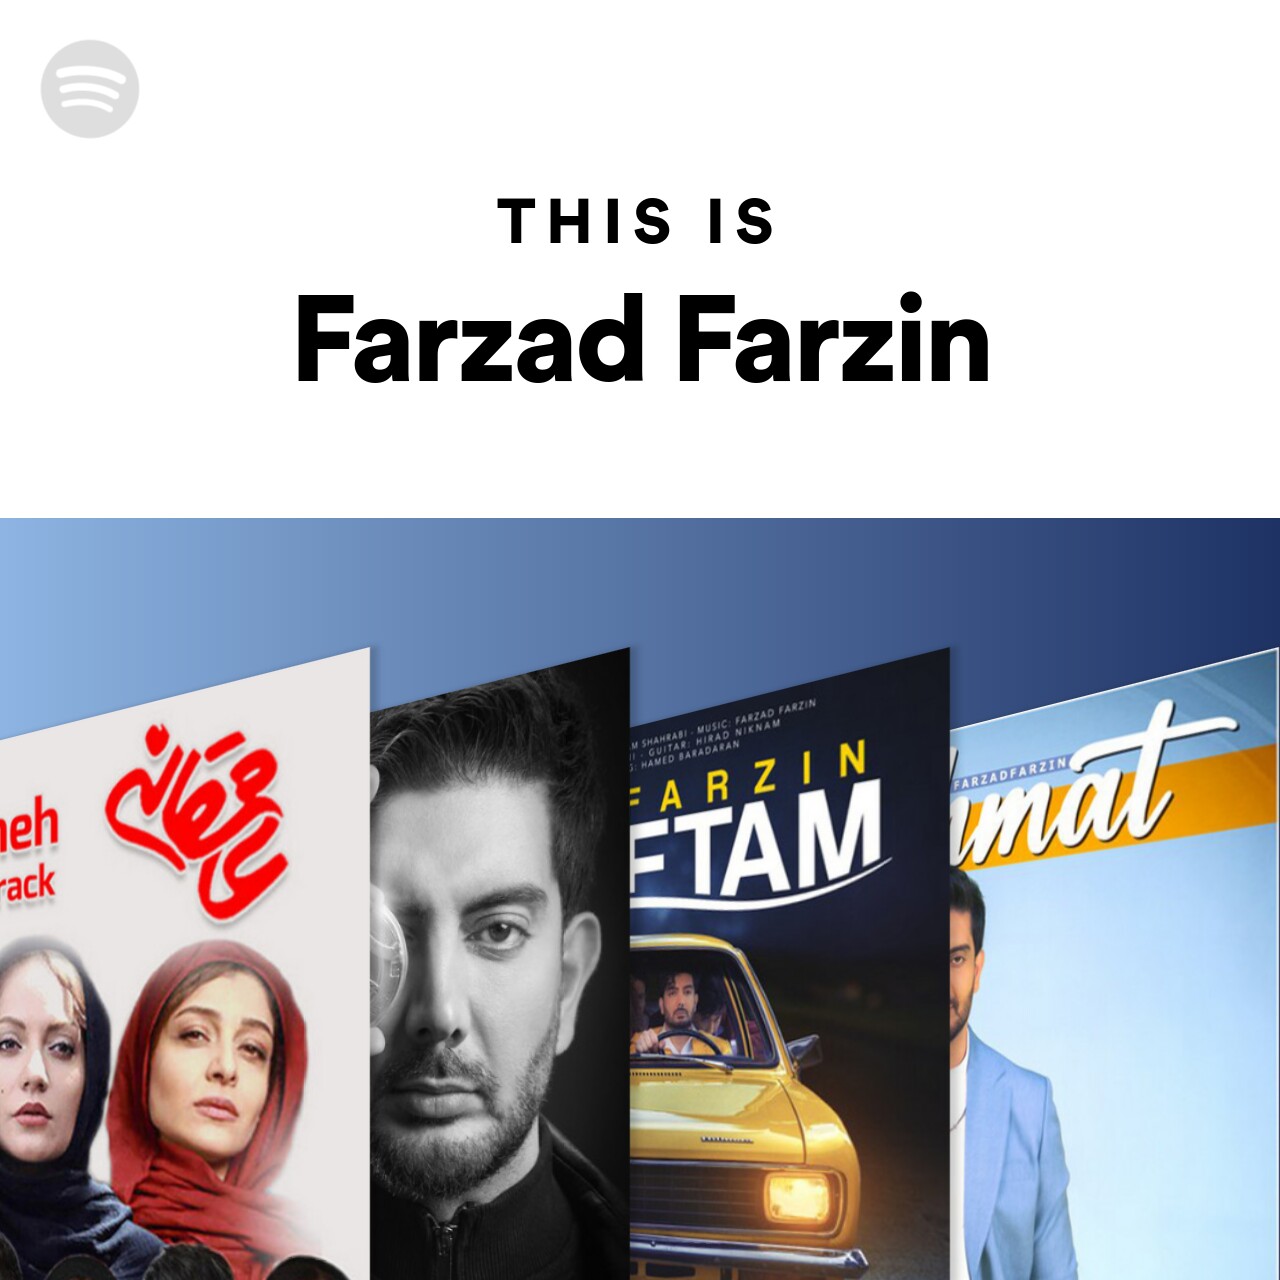 This Is Farzad Farzin